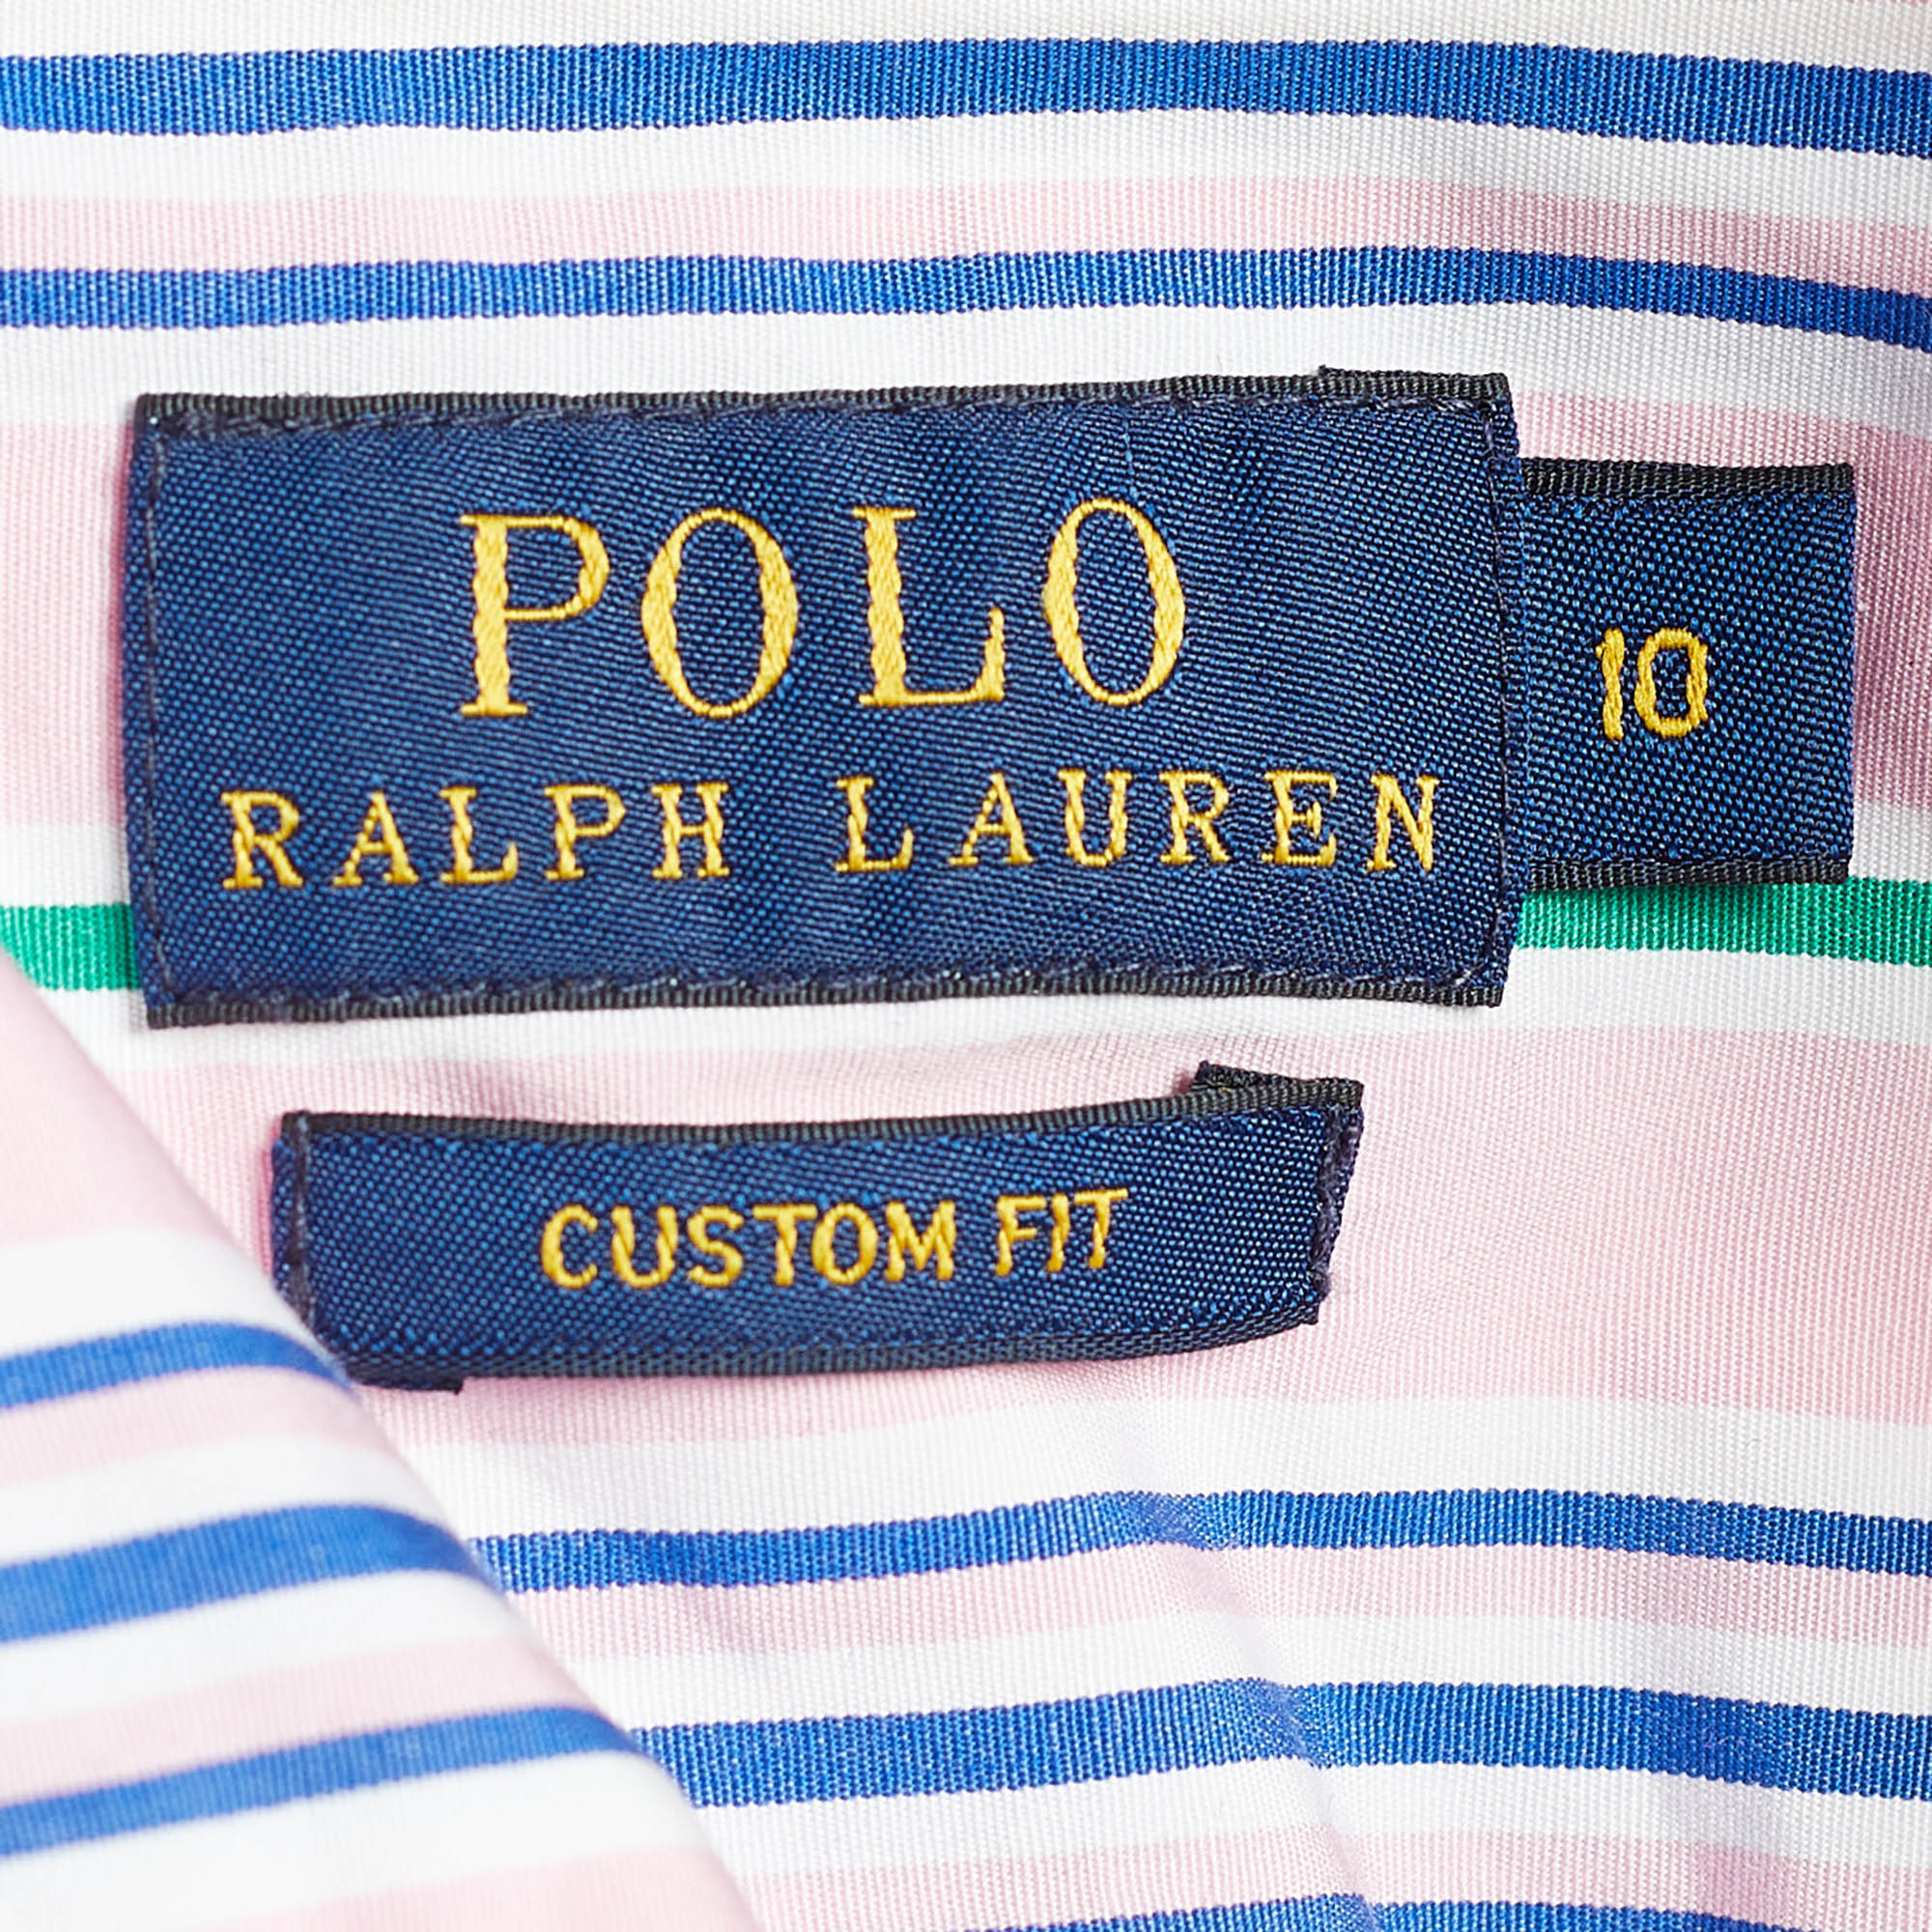 Polo Ralph Lauren Pink Striped Cotton Button Front Shirt L